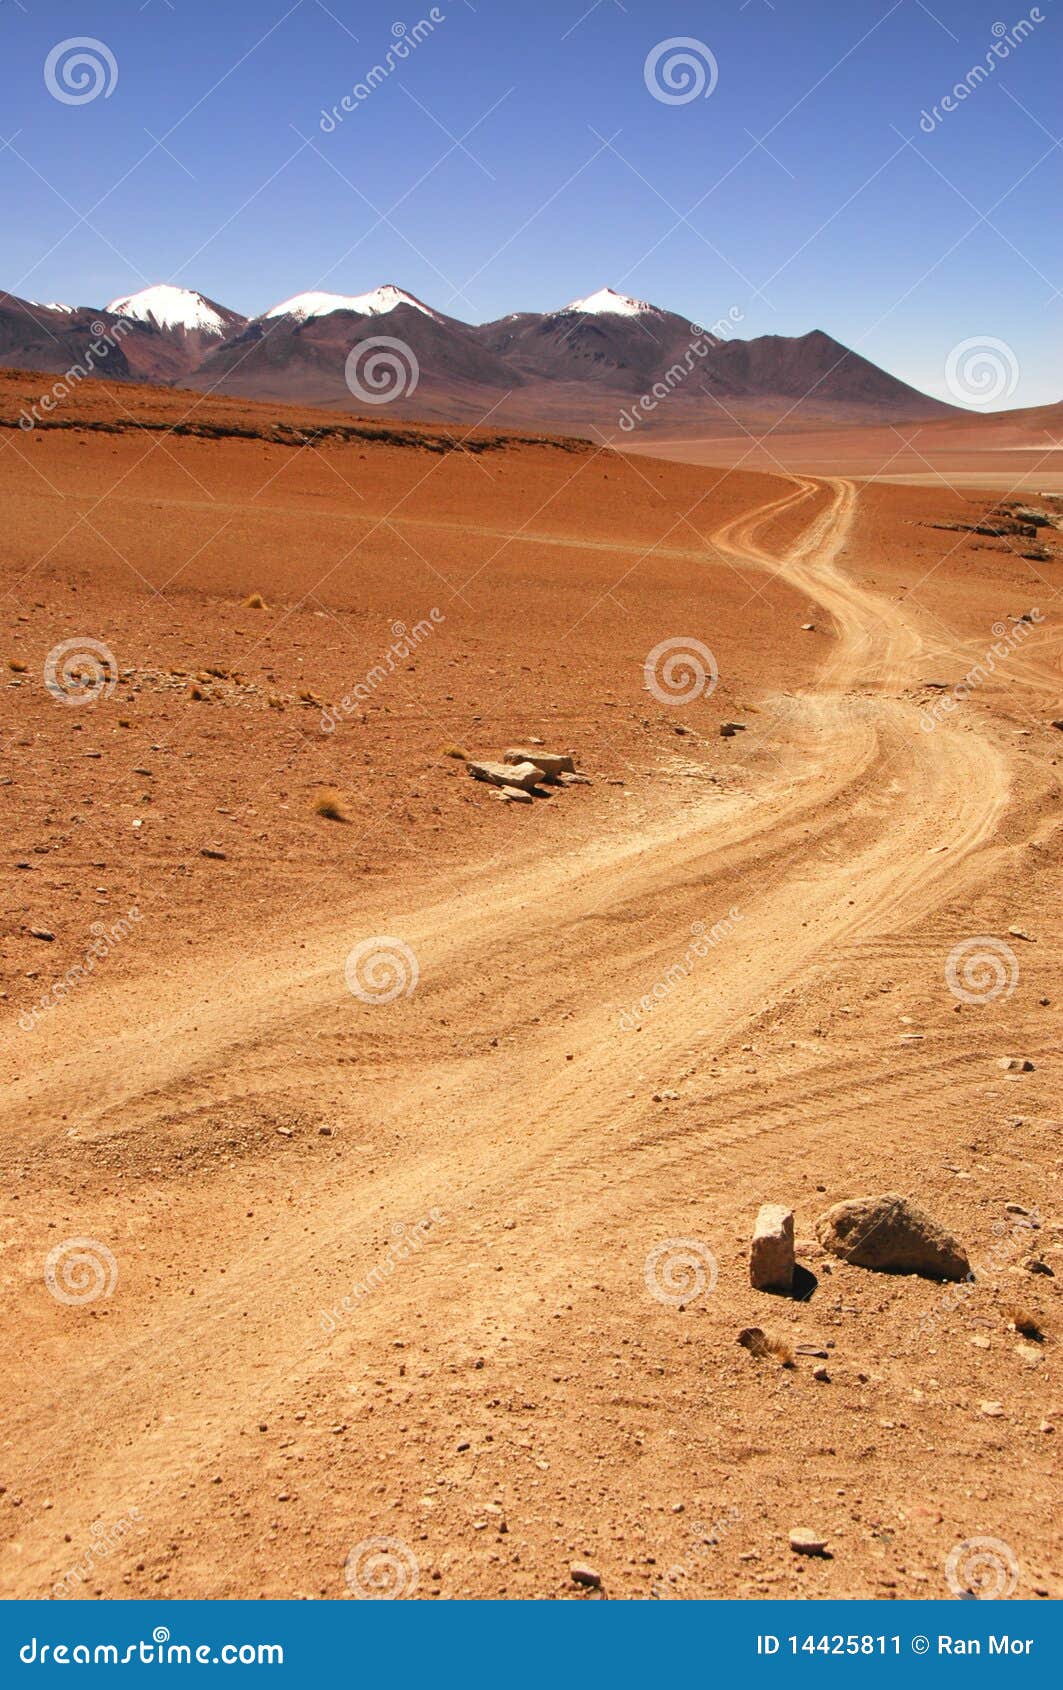 4x4 trail in the desert